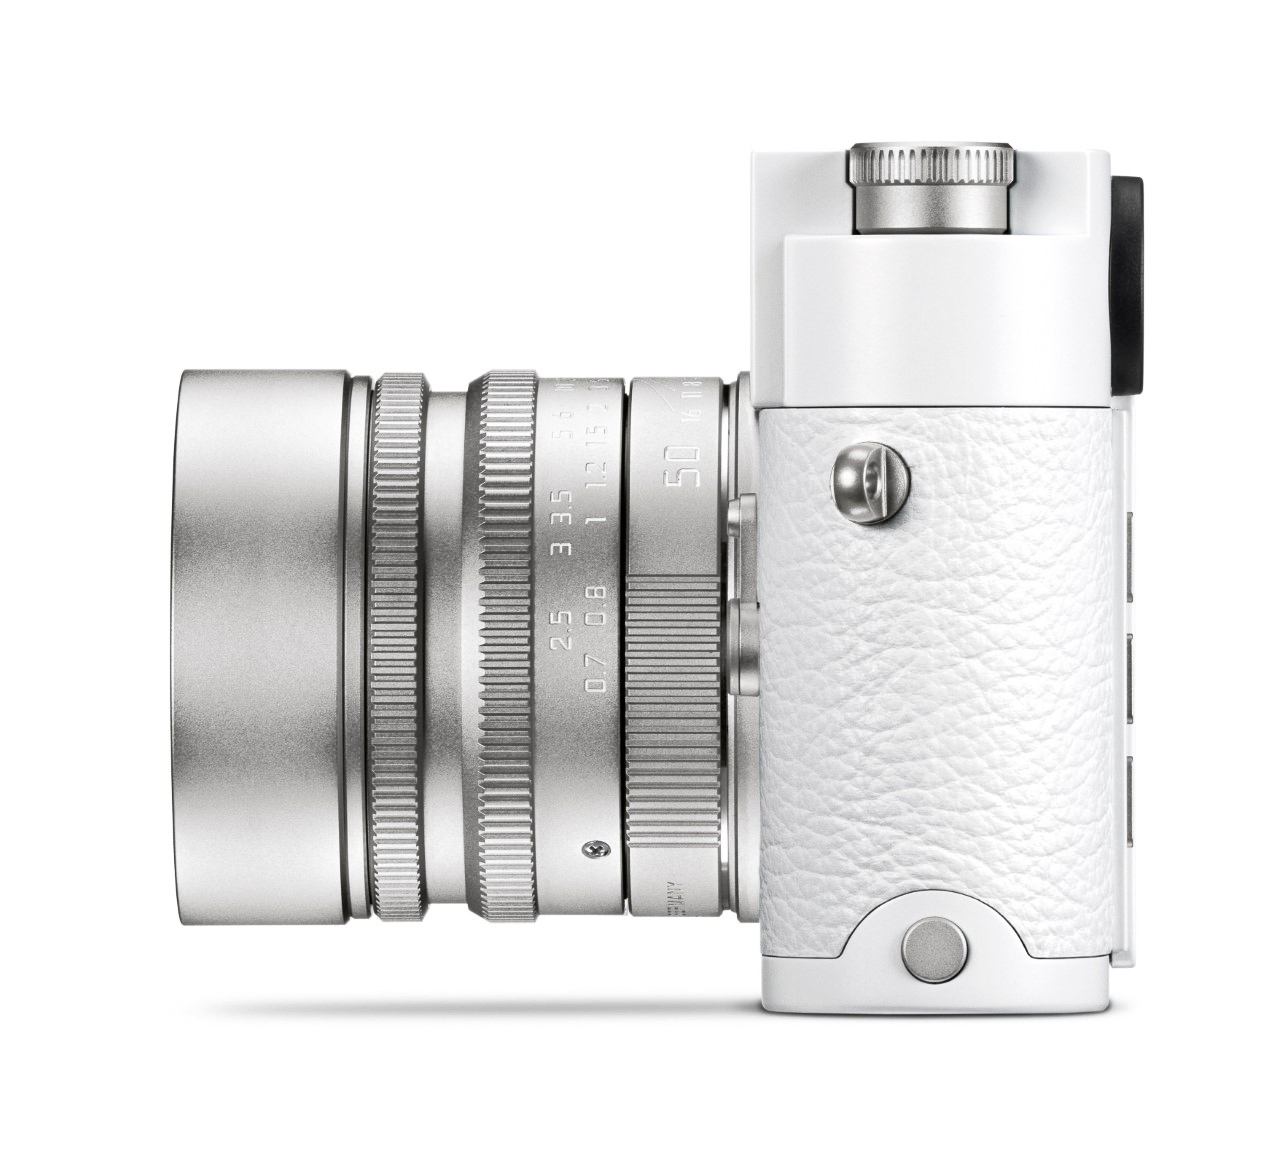 Leica tung ra 350 bản giới hạn của Leica M10-P "White" với giá gần 366 triệu VNĐ